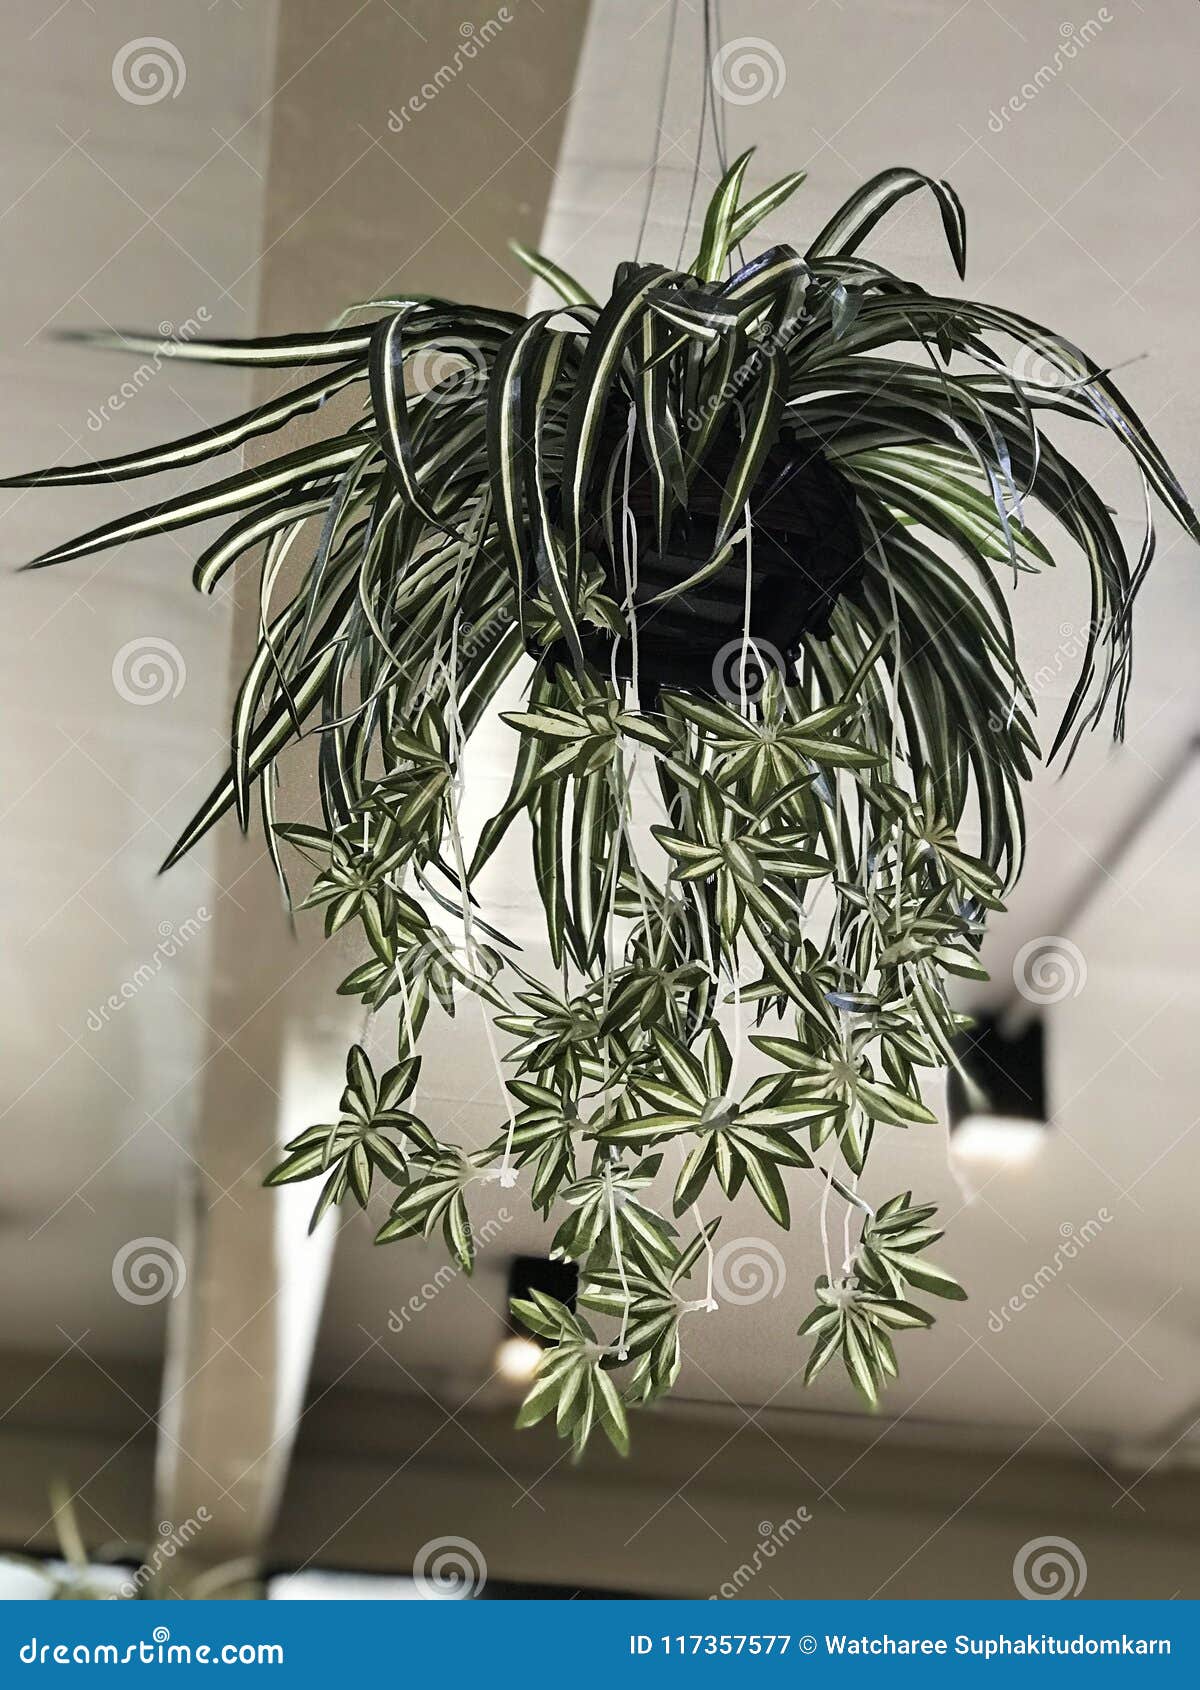 Chlorophytum Comosum Or Spider Plant Or Airplane Plant Or Spider Ivy Or Ribbon Plant Stock Image Image Of Herbal Biology 117357577